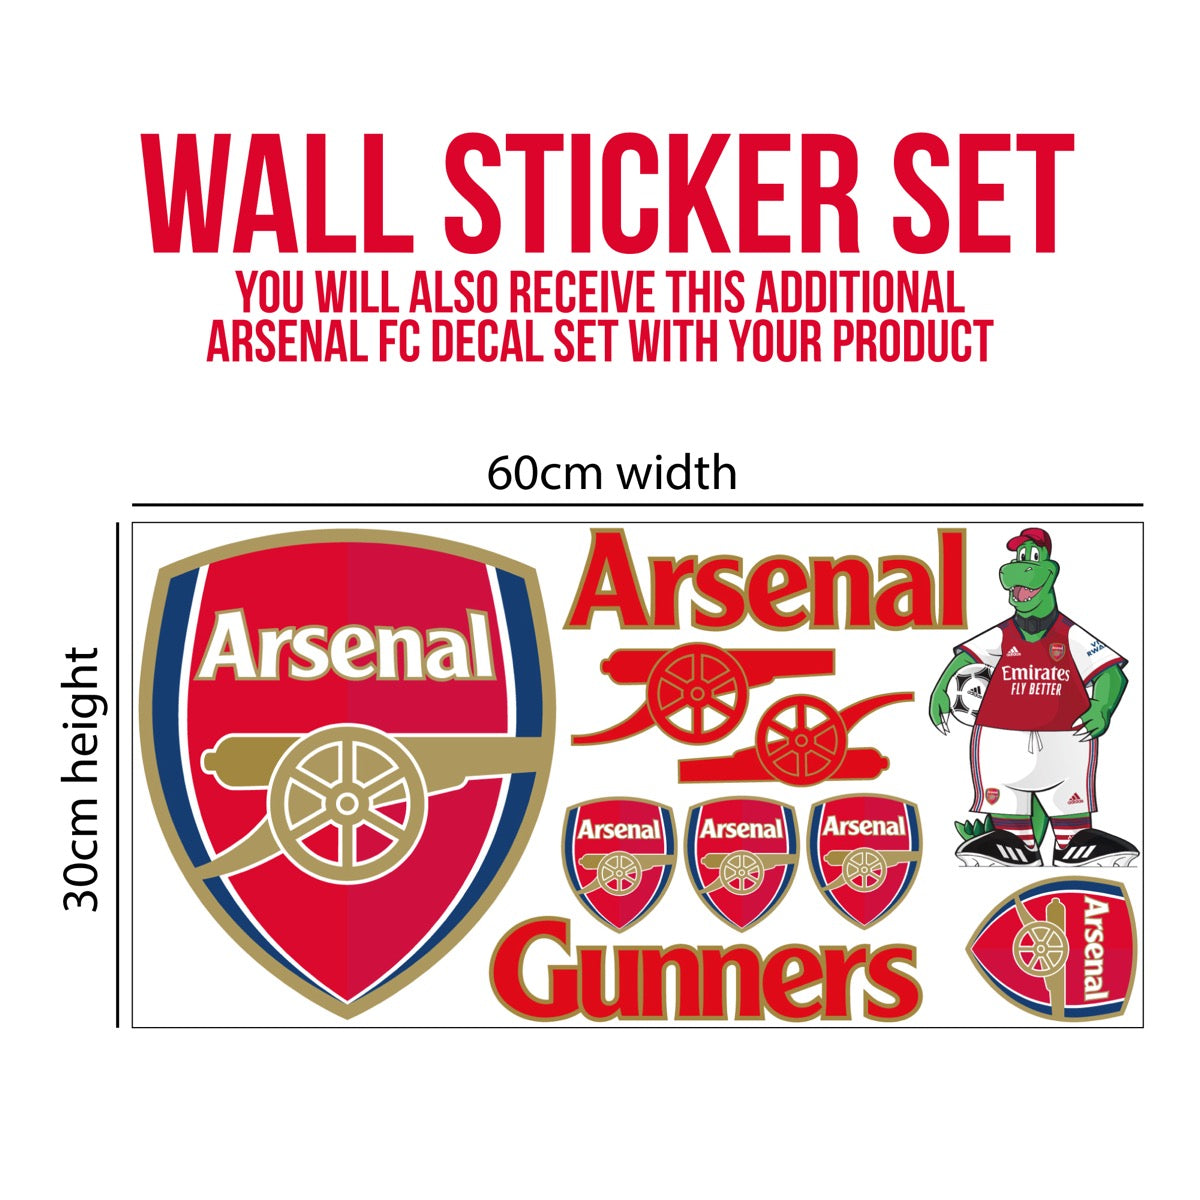 Arsenal Football Club - Emirates Stadium Outside View Mural + Gunners Wall Sticker Set